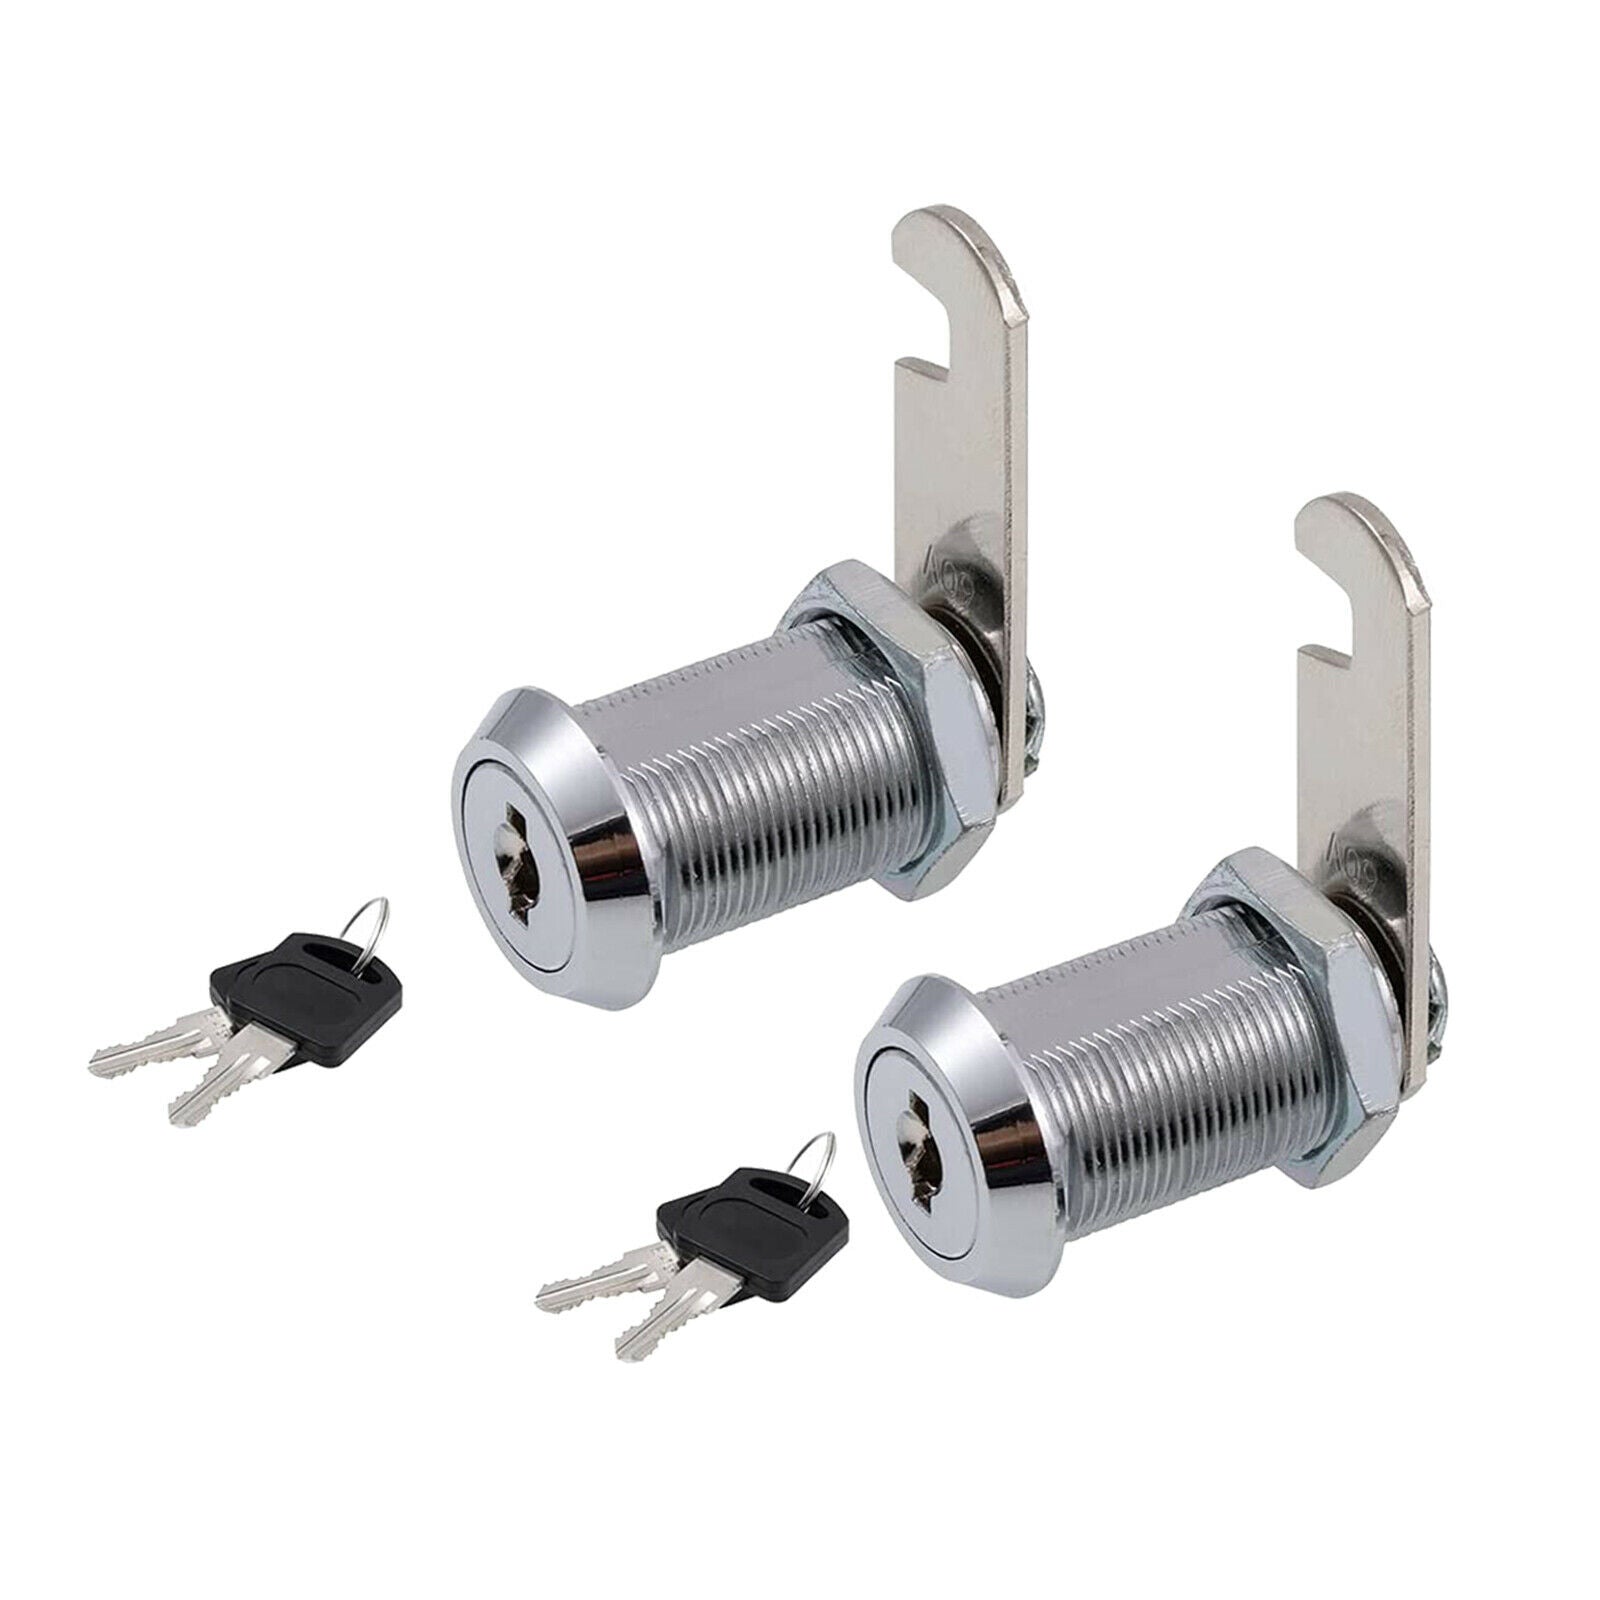 4Pcs Zinc Alloy 30mm 1-1/8 Inch Cam Lock Set Secure Cabinet Drawer RV Locks